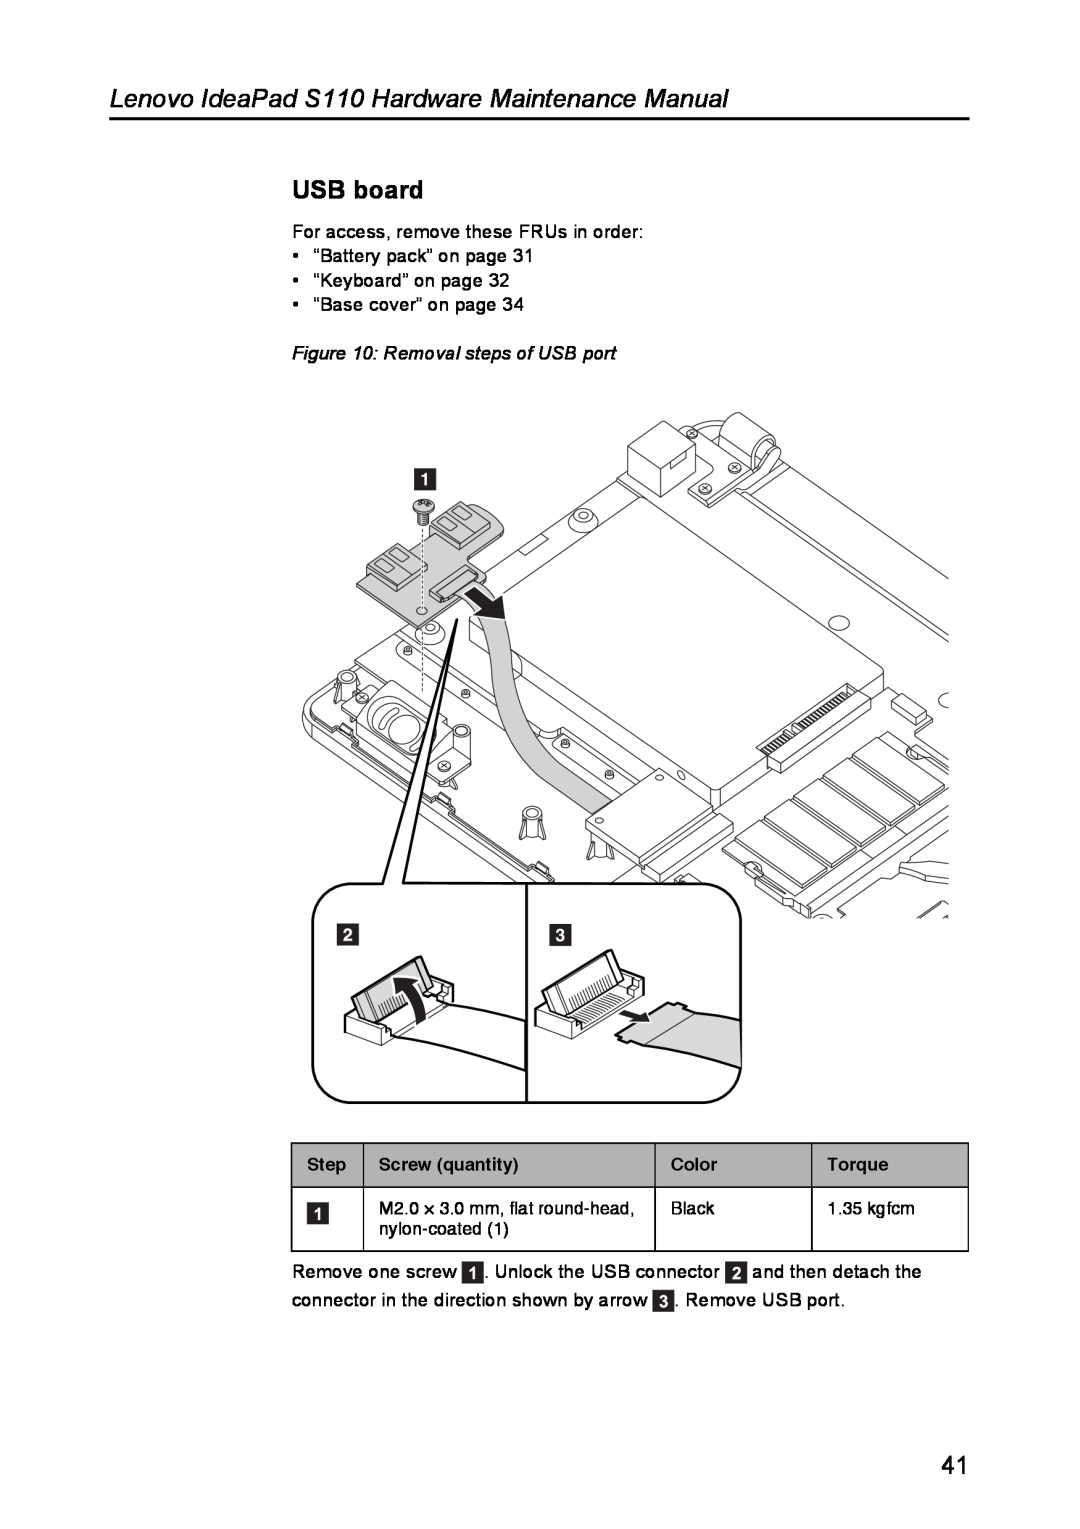 Lenovo manual USB board, Removal steps of USB port, Lenovo IdeaPad S110 Hardware Maintenance Manual 